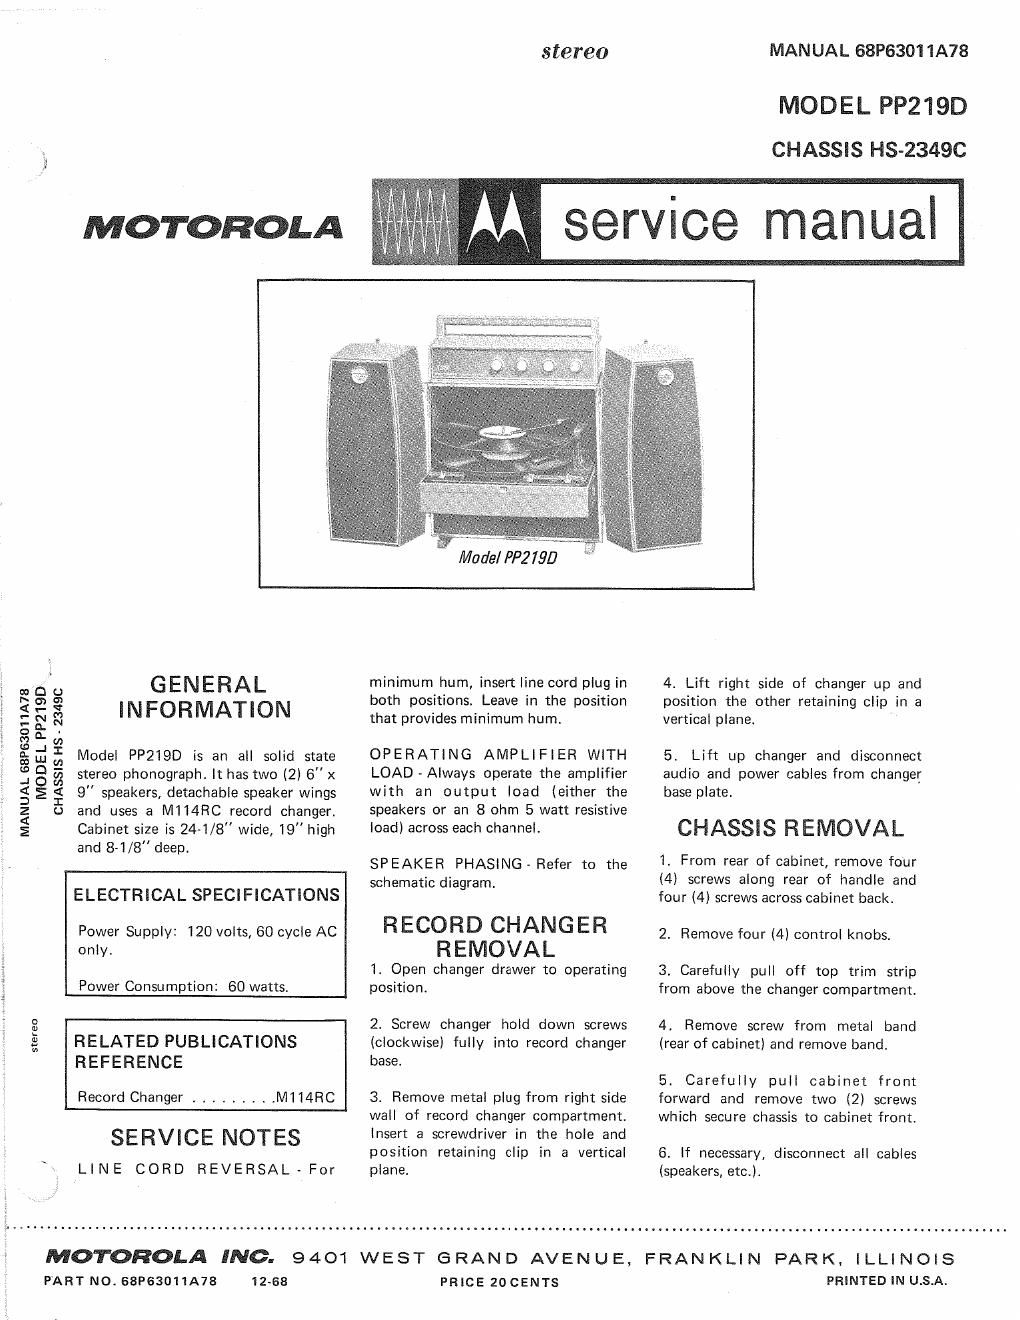 motorola pp 219 d service manual